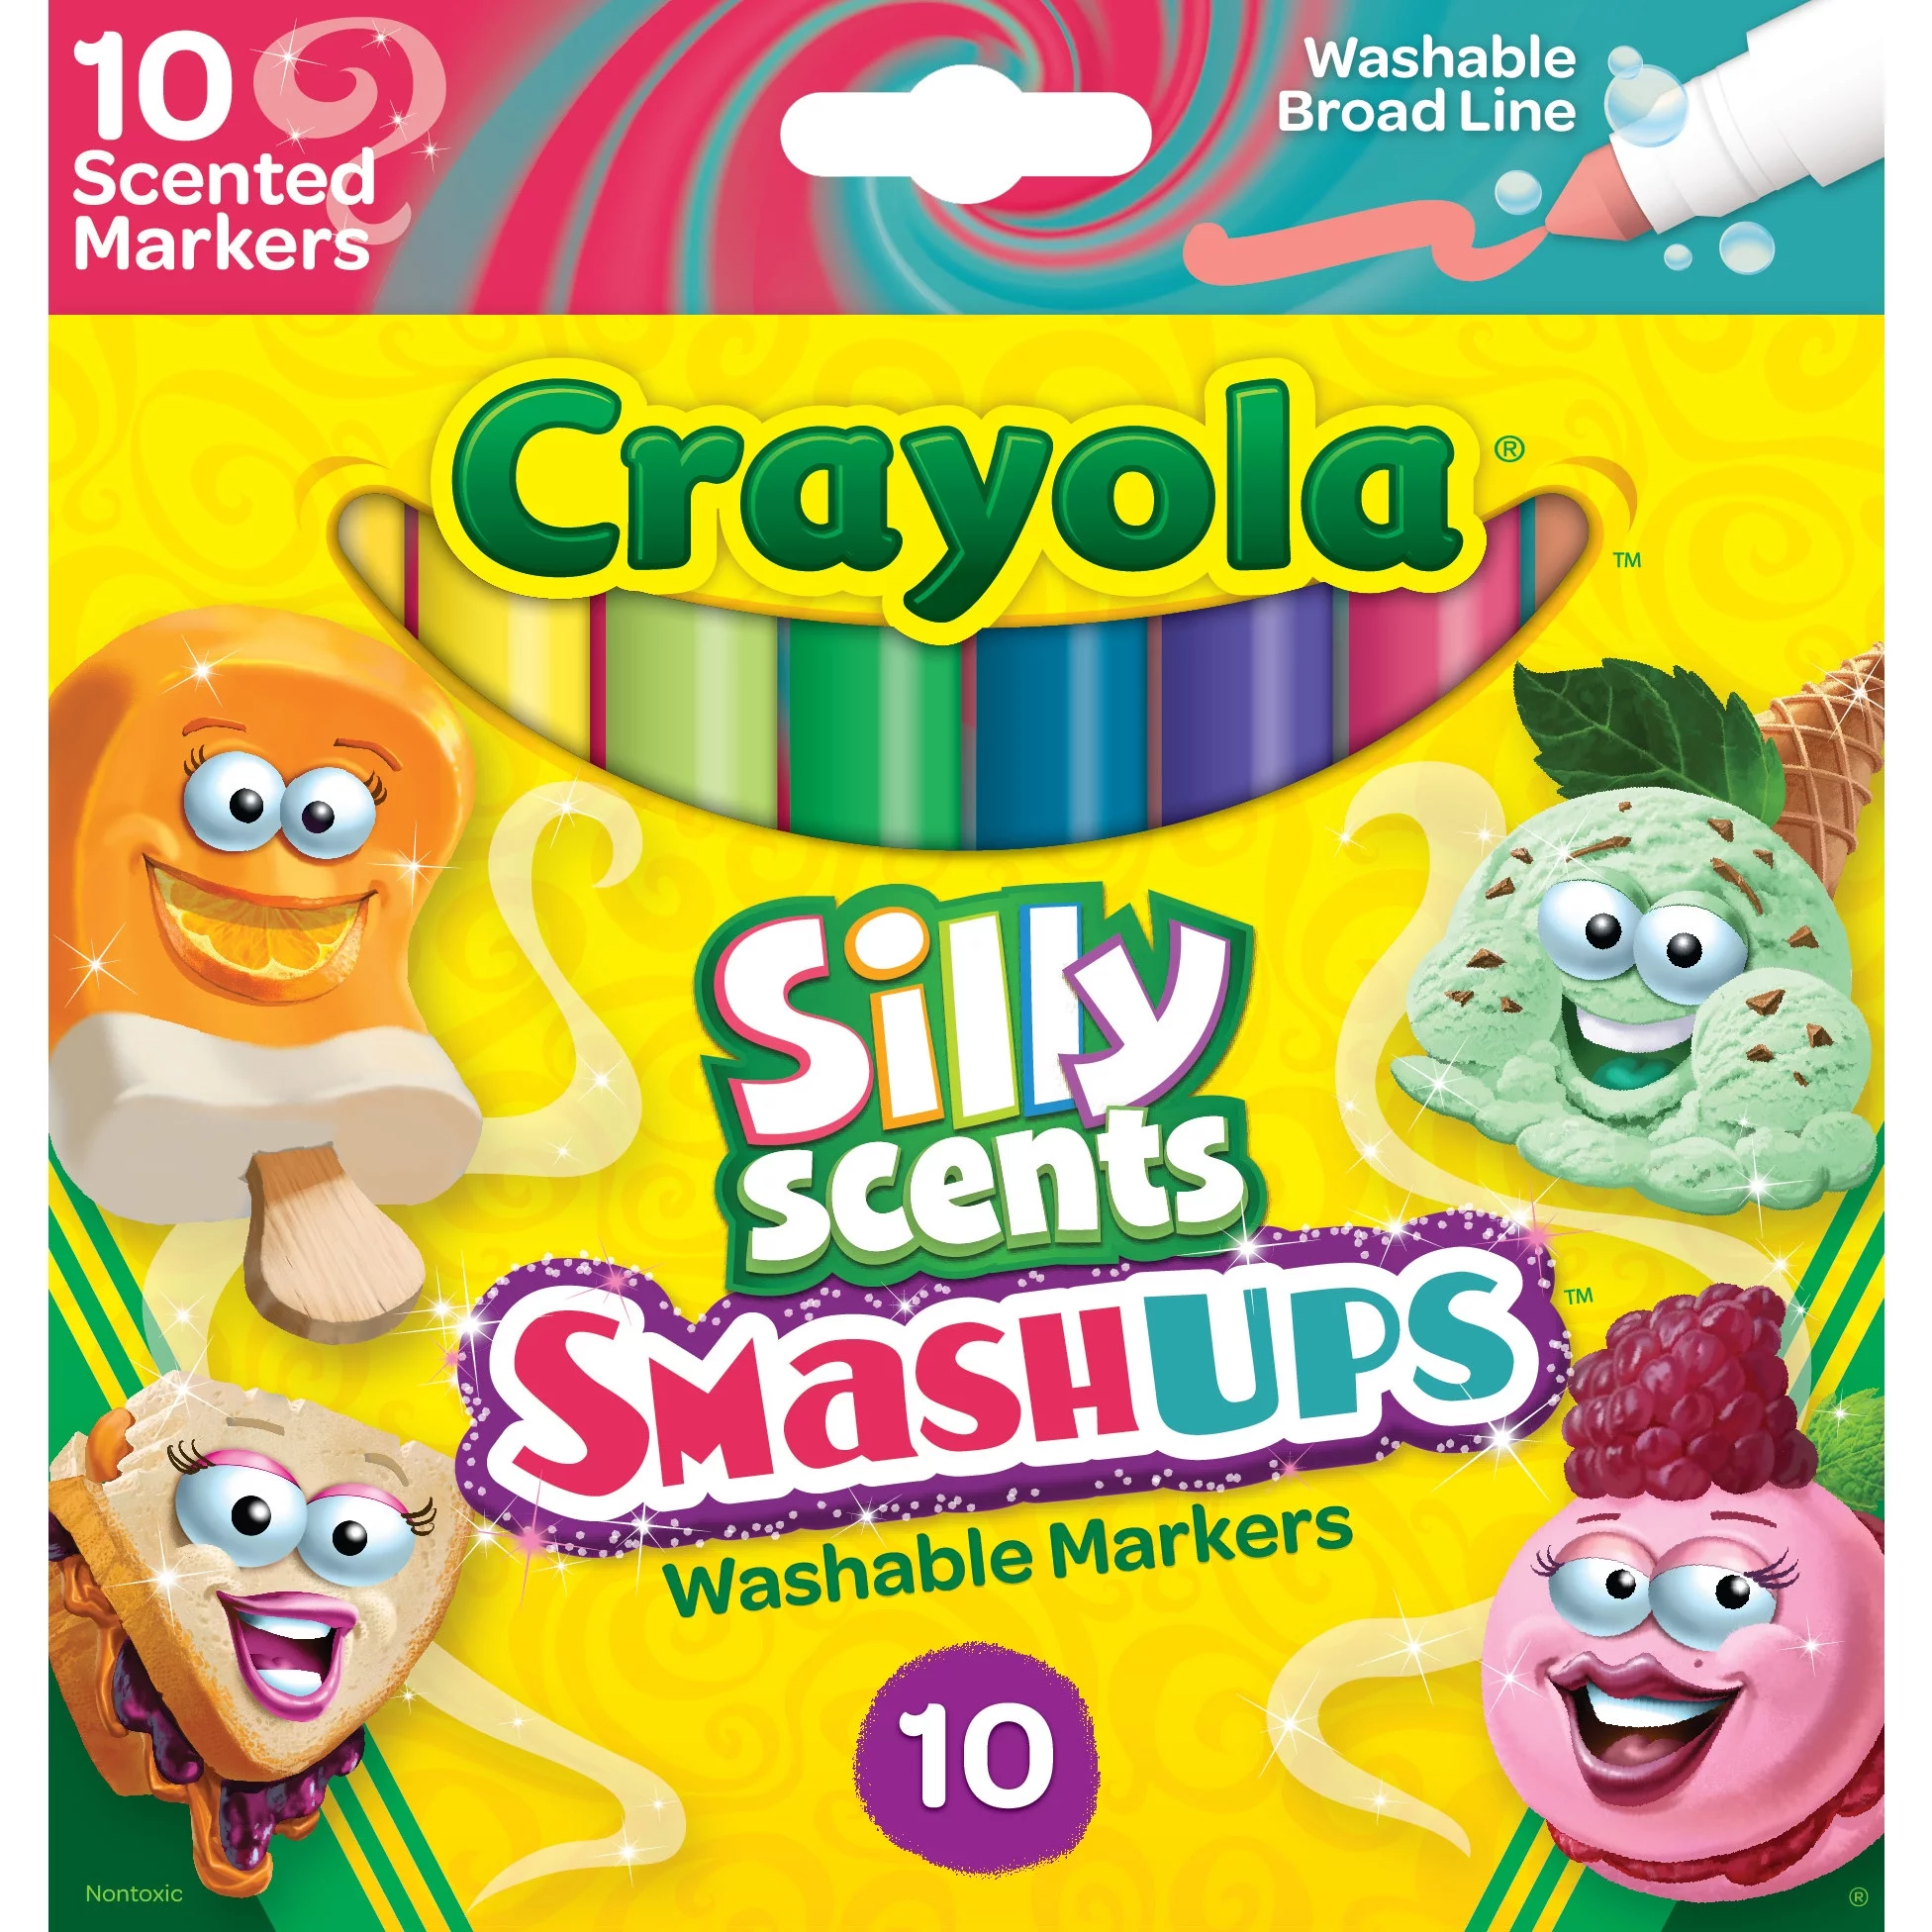  Crayola Silly Scents Smashups 10 Washable Markers 